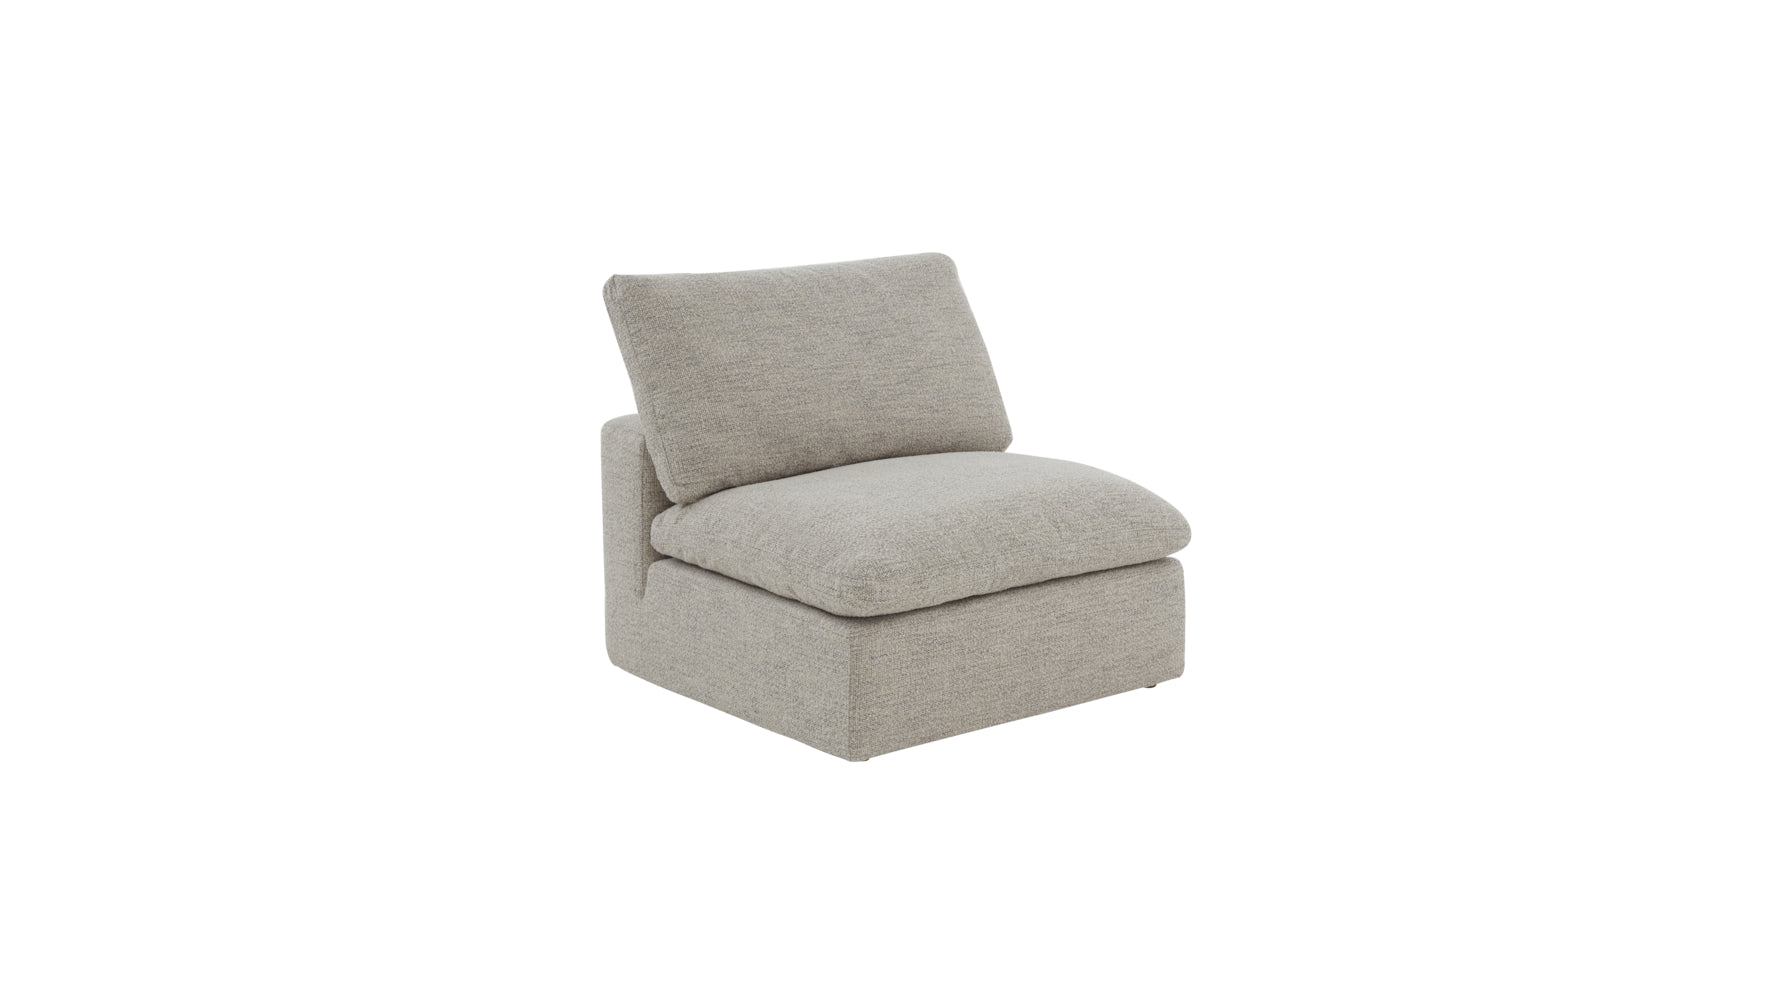 Movie Night™ Armless Chair, Standard, Oatmeal - Image 6